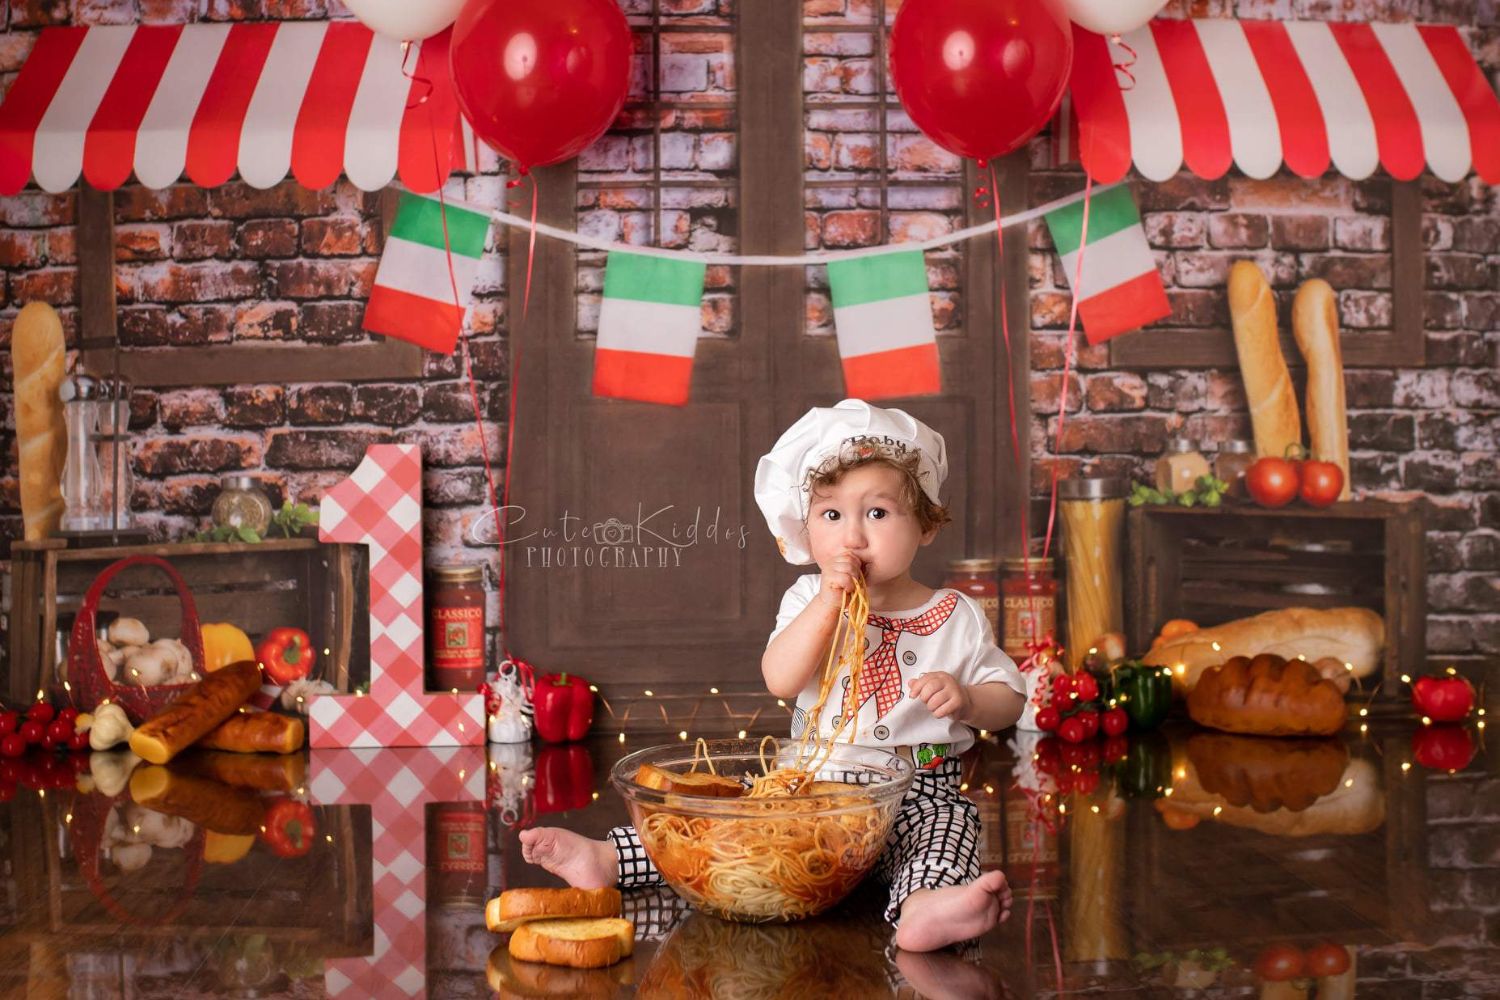 baby eating spaghetti photo with Kate Spaghetti Smash/Cake Smash Brick Kitchen Bread Backdrop Designed By Rose Abbas